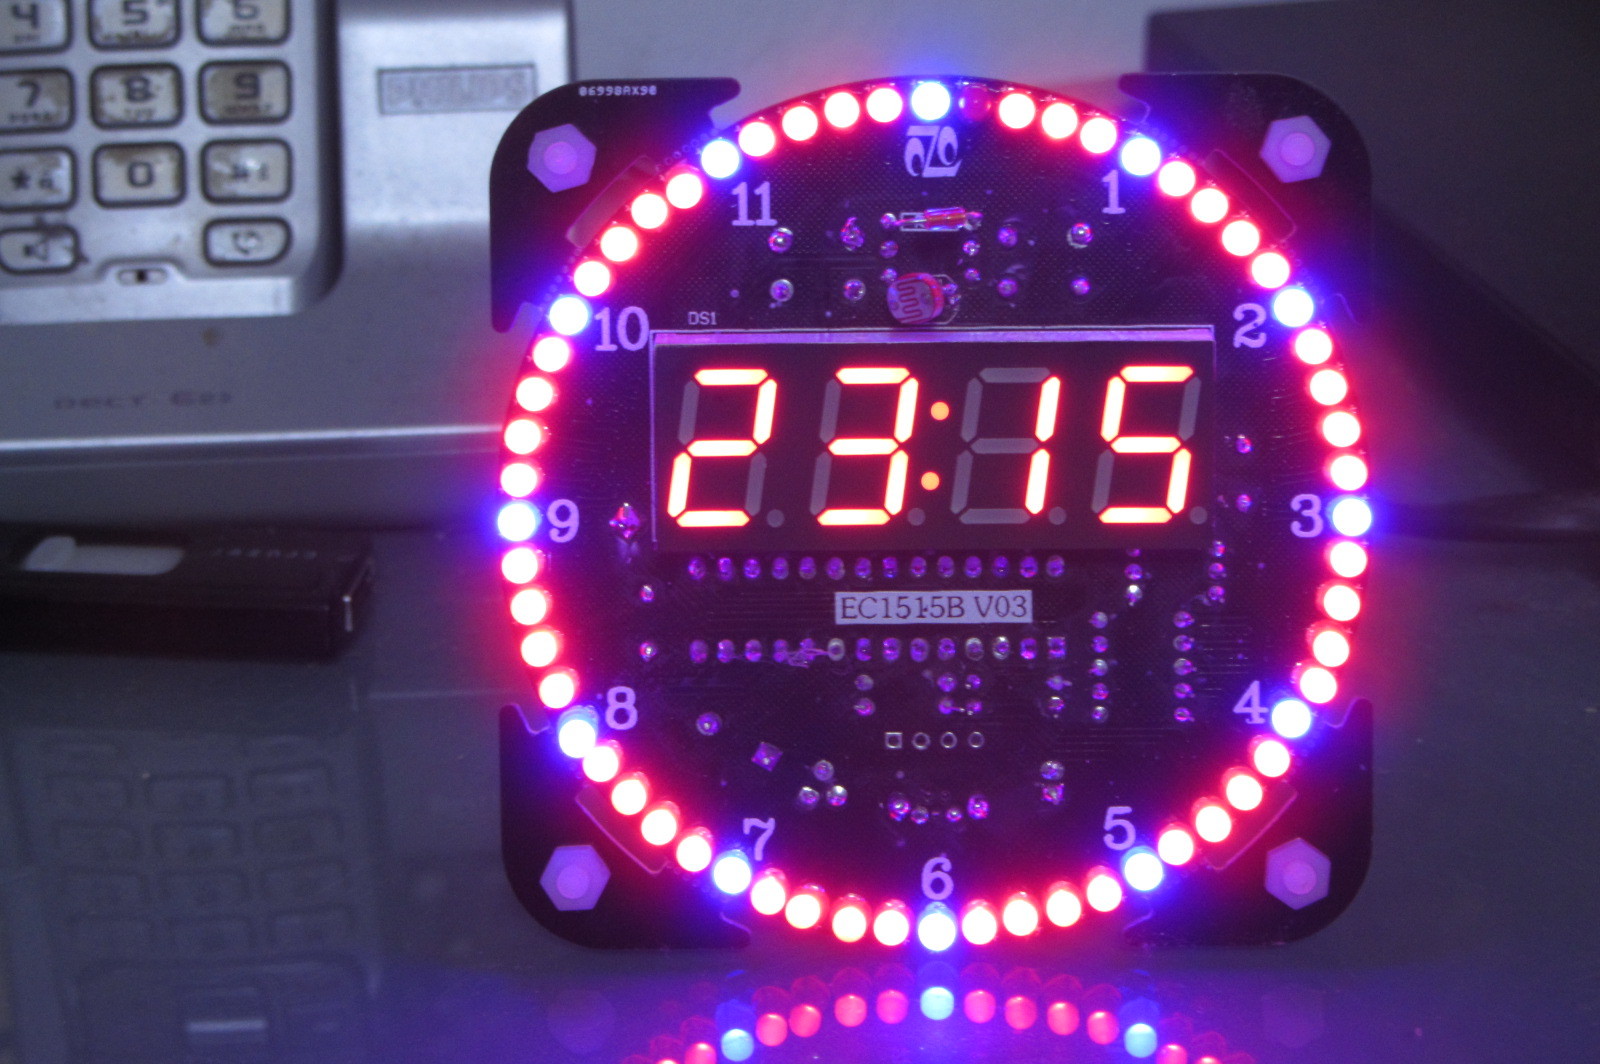 Bausatz Rotation LED Uhr DS1302 mit Gehäuse